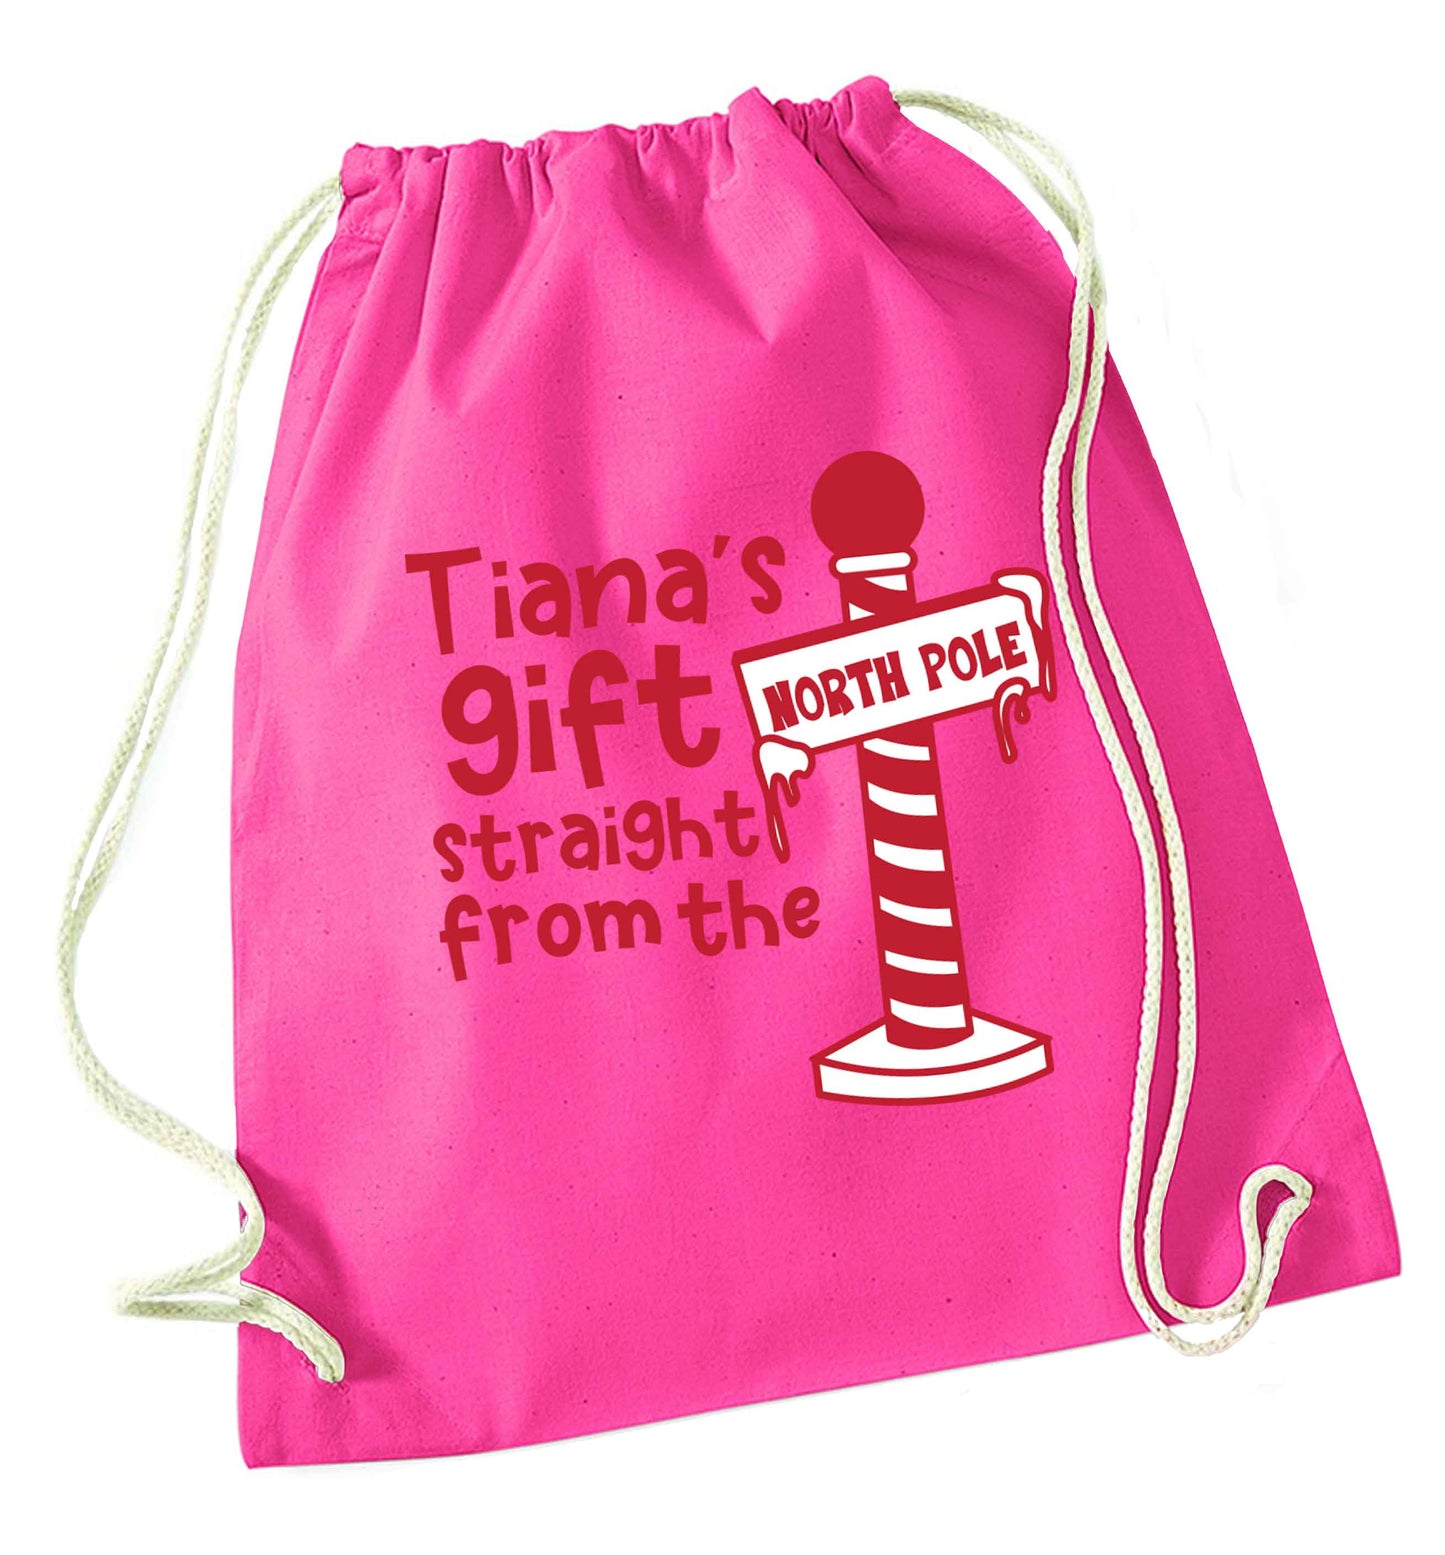 Merry Christmas pink drawstring bag